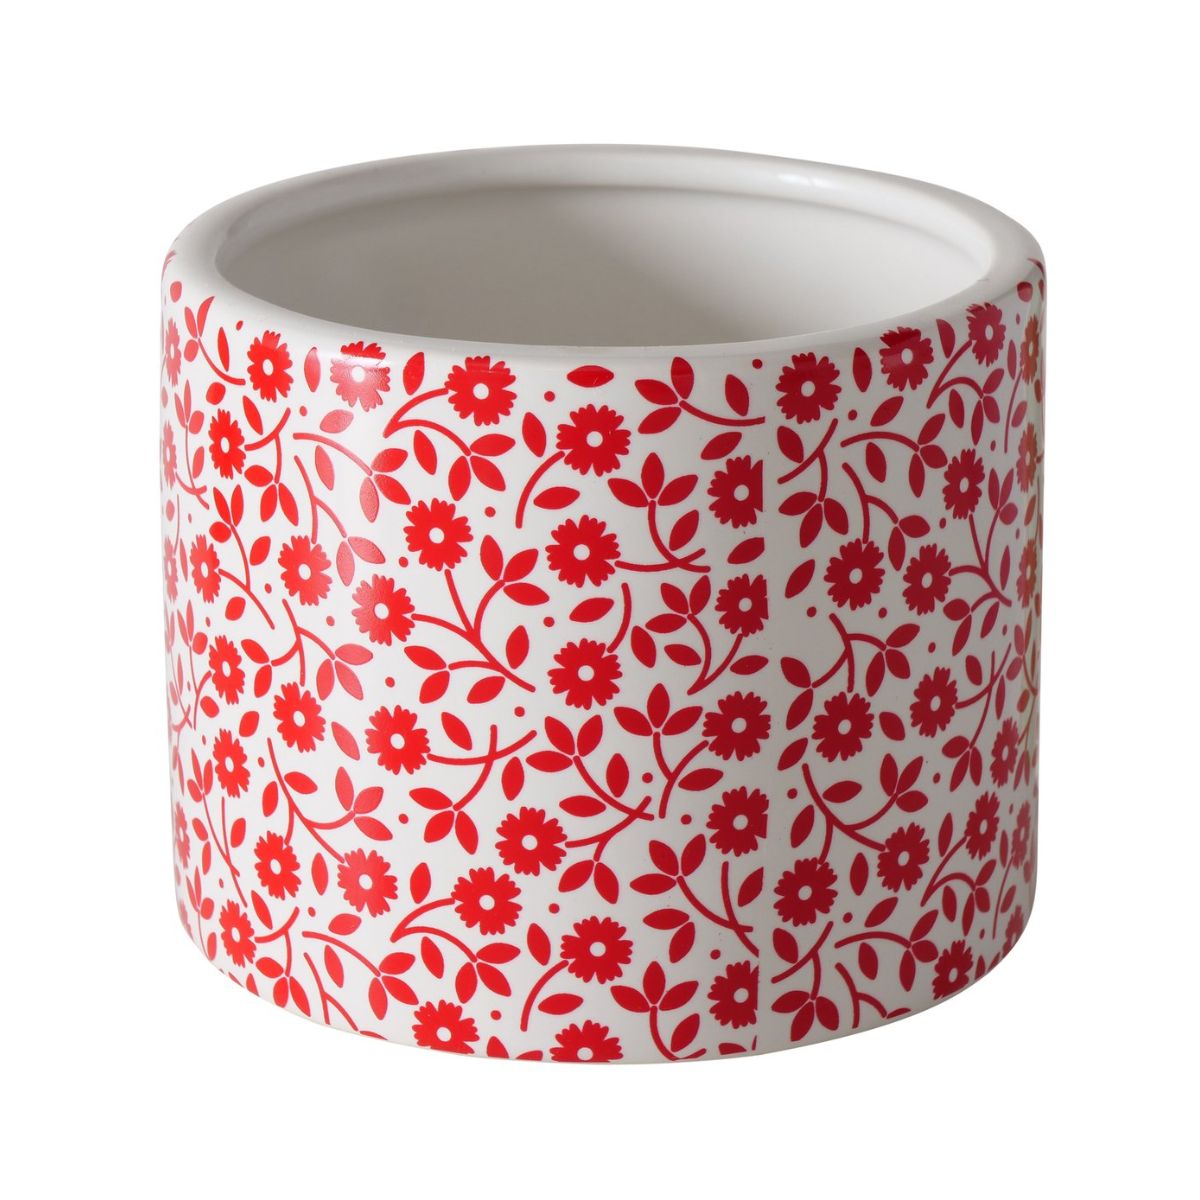 DECORATIUNI INTERIOR - Suport decorativ pentru ghiveci, din ceramica, Ø10 cm alb/rosu Floral Lilly Boltze, hectarul.ro